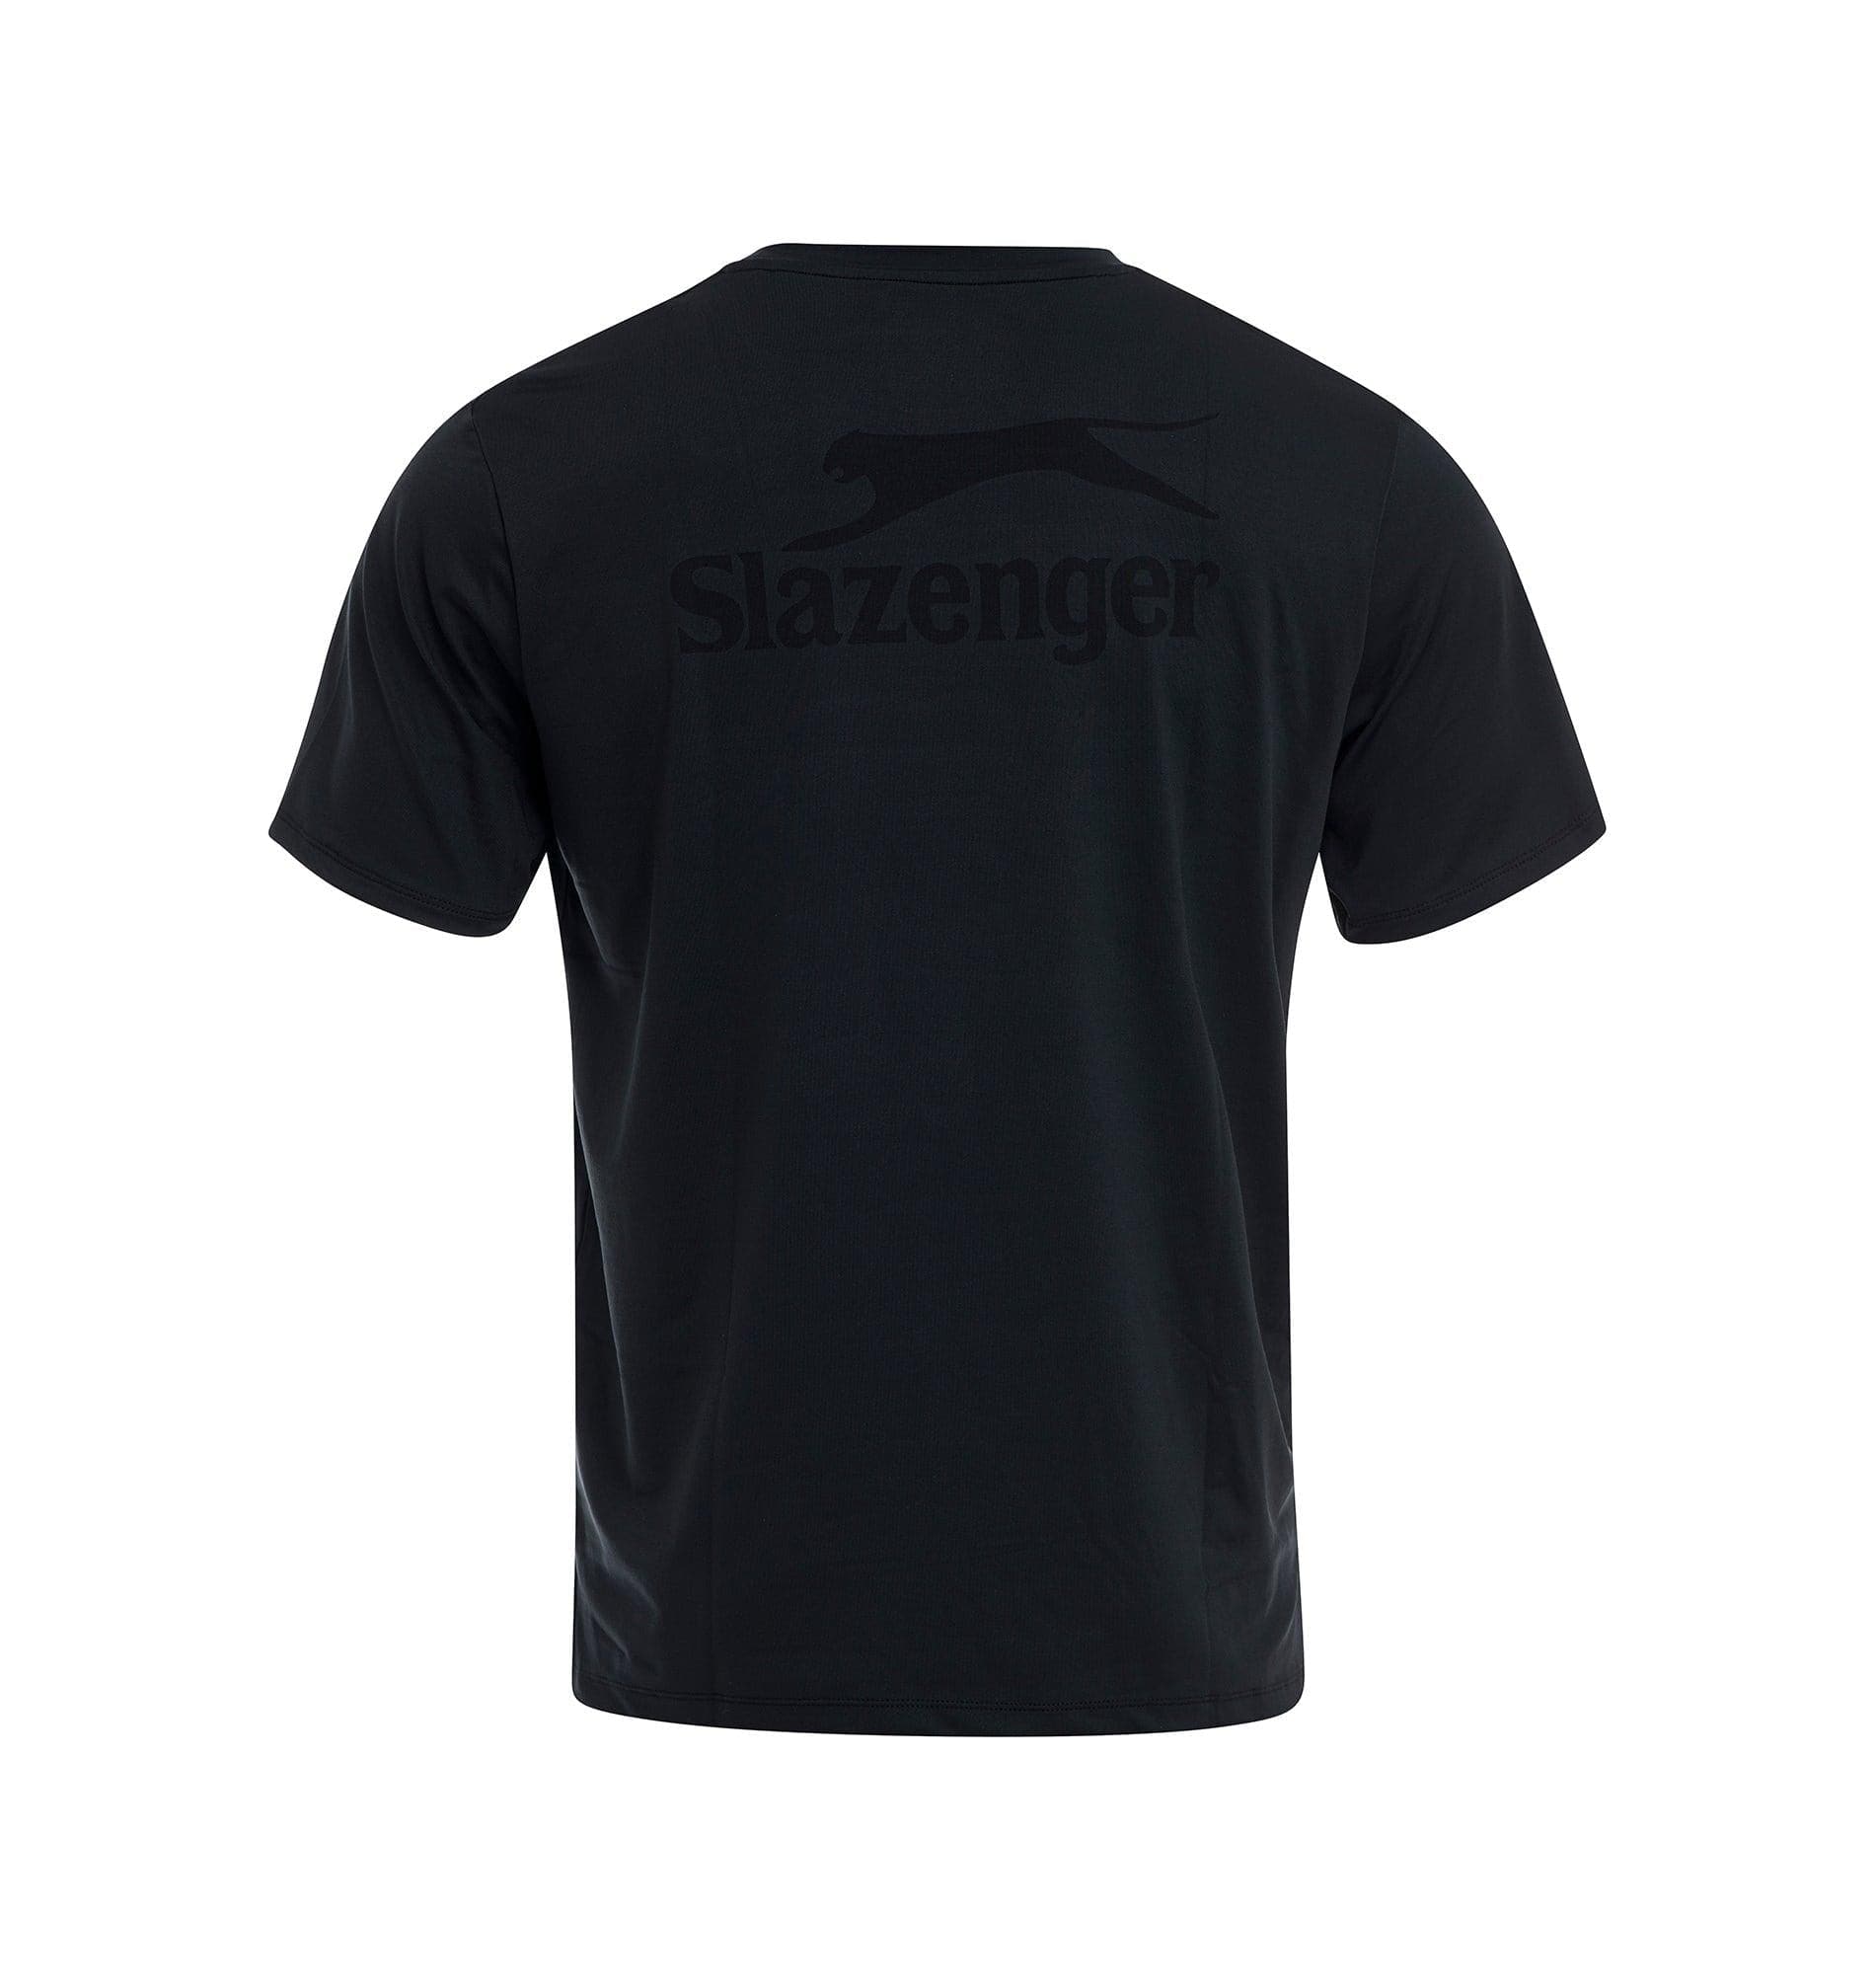 Tim Tee Black-T-Shirts-Padel Corner-Clothing, pfs:label-Coming Soon, Slazenger, T-Shirt